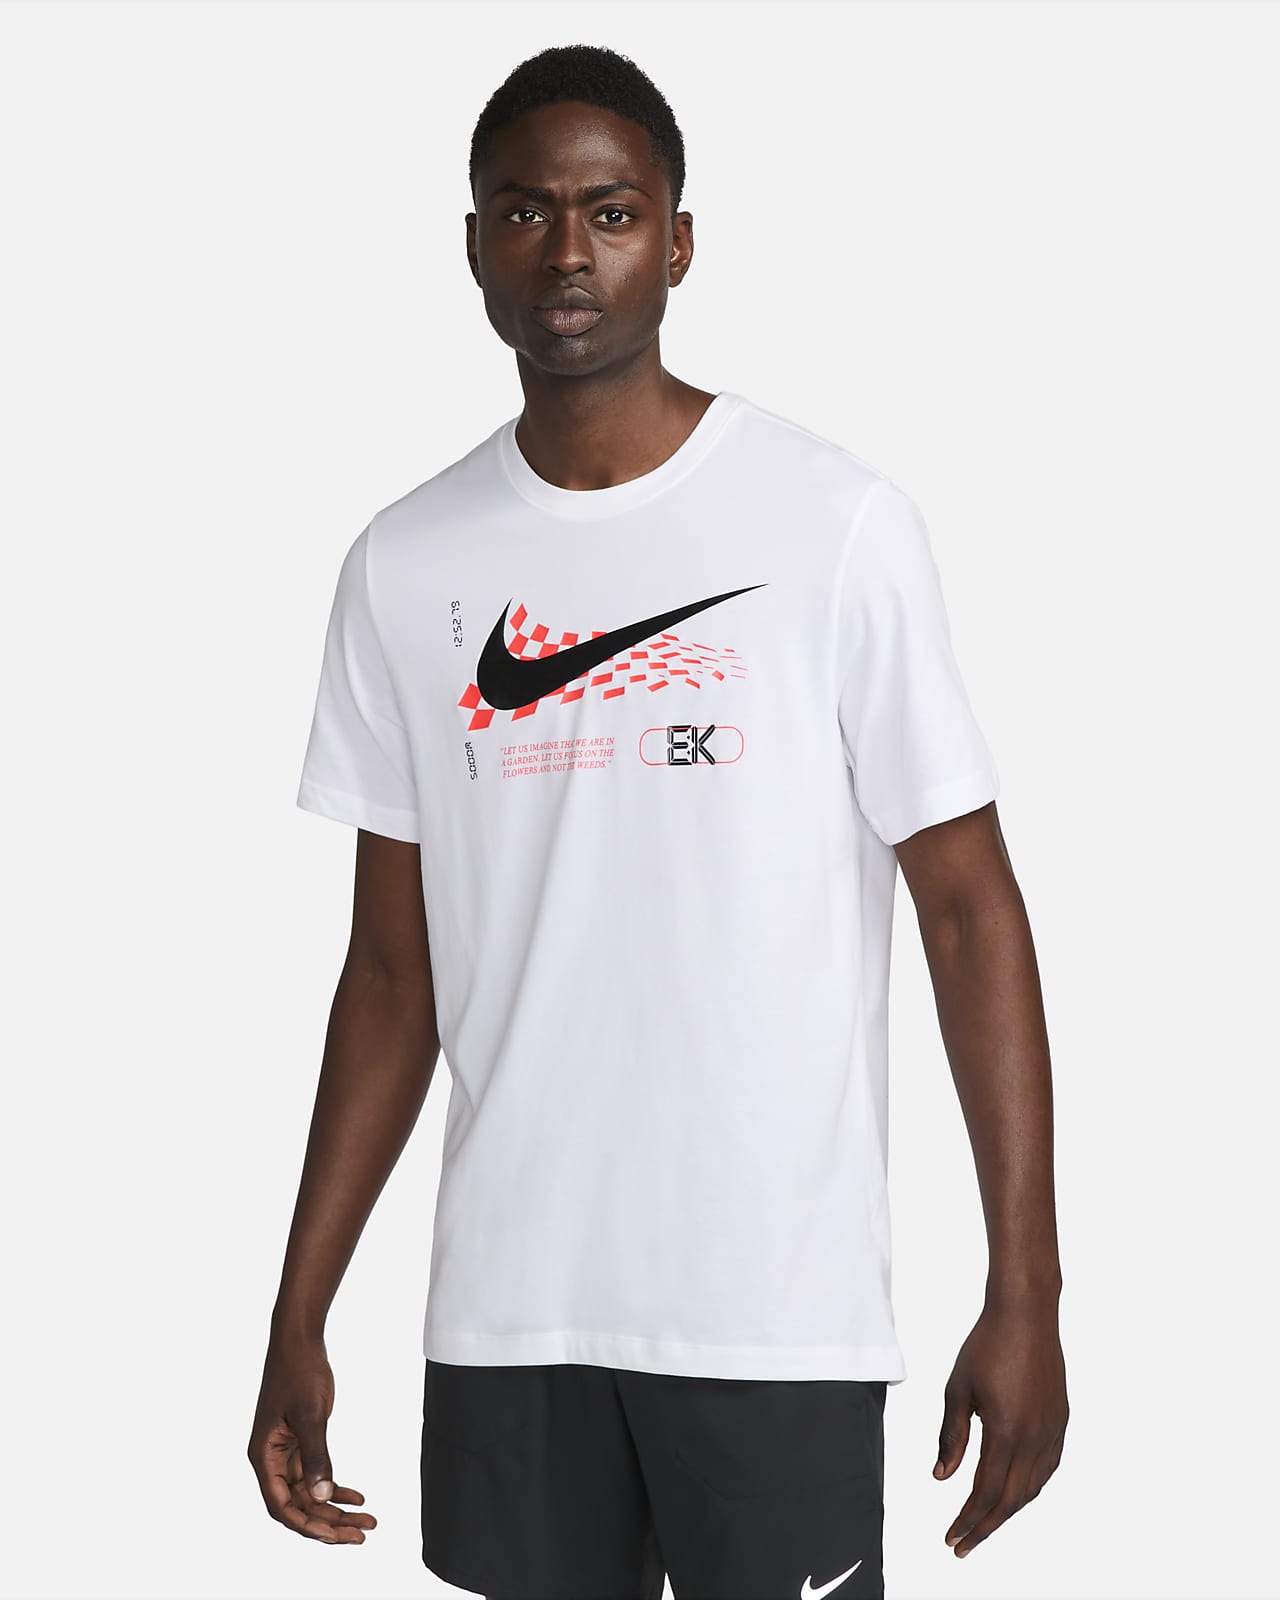 Nike, Shirts, Nike Drifit Usa Baseball Tee